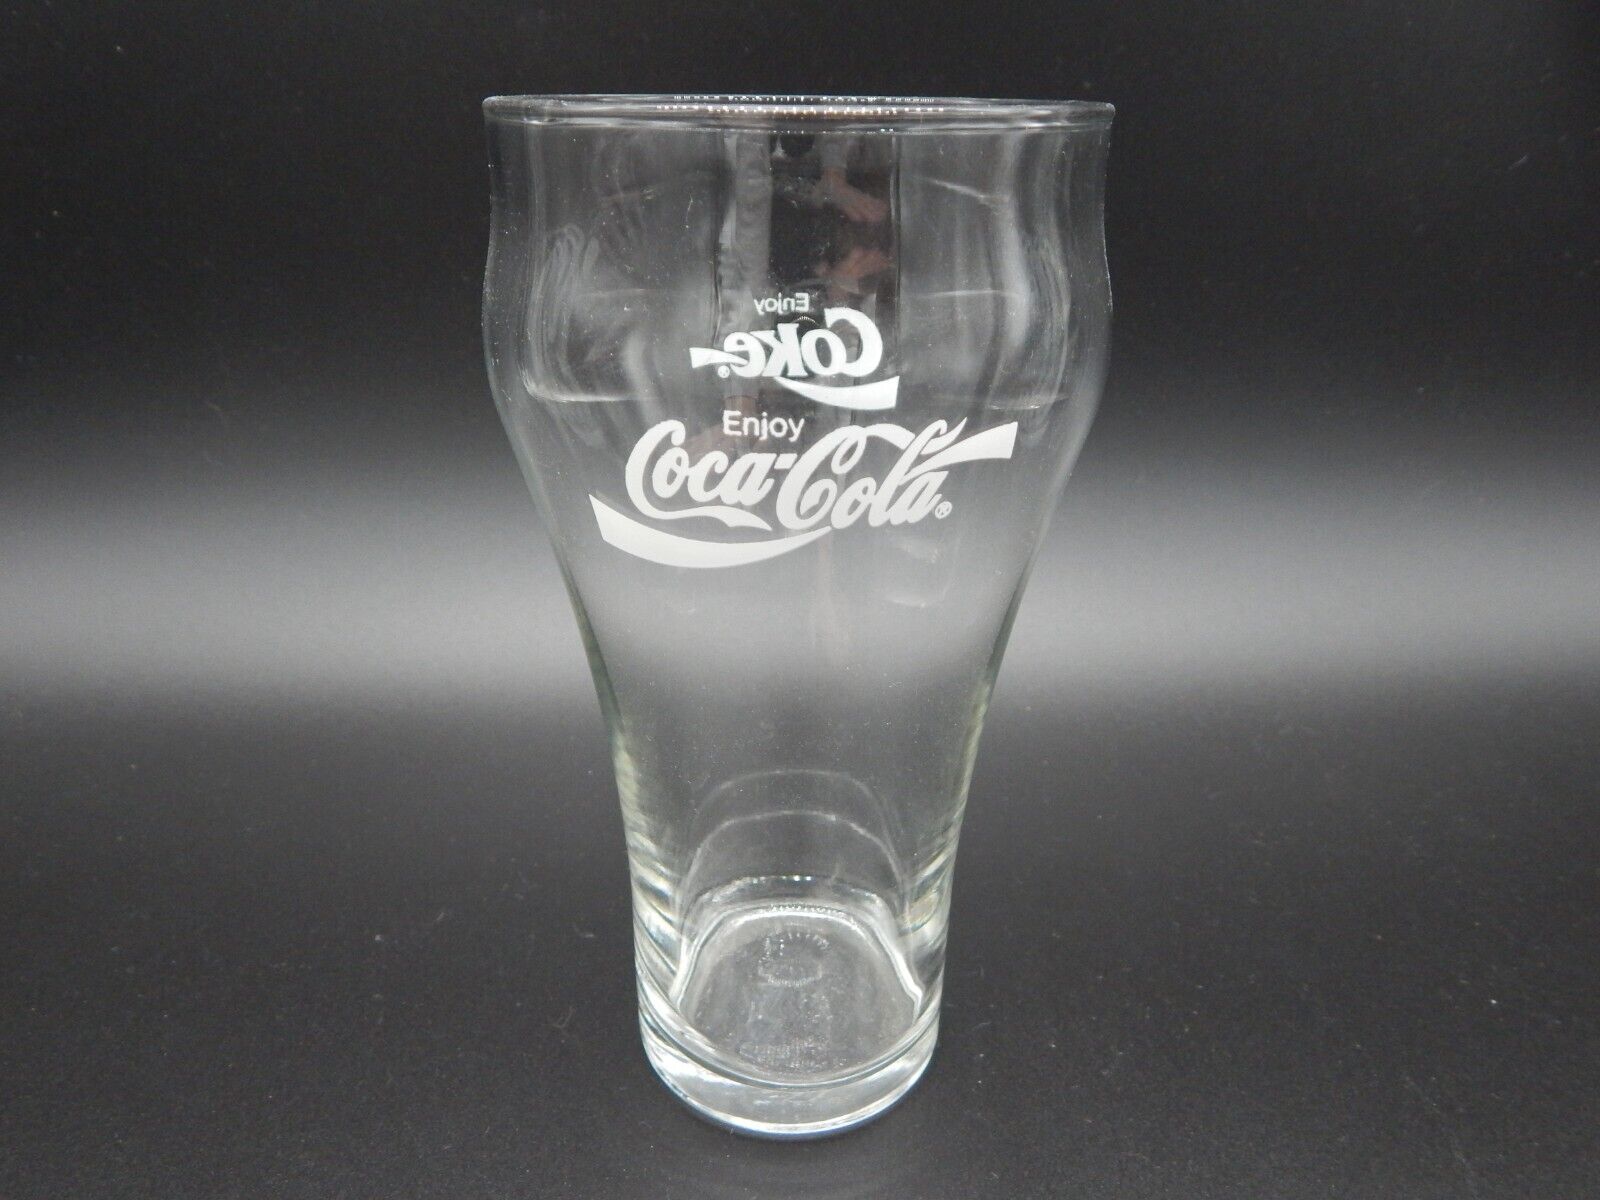 Clear Coca Cola Enjoy Coke Clear Soda Glass 16 oz